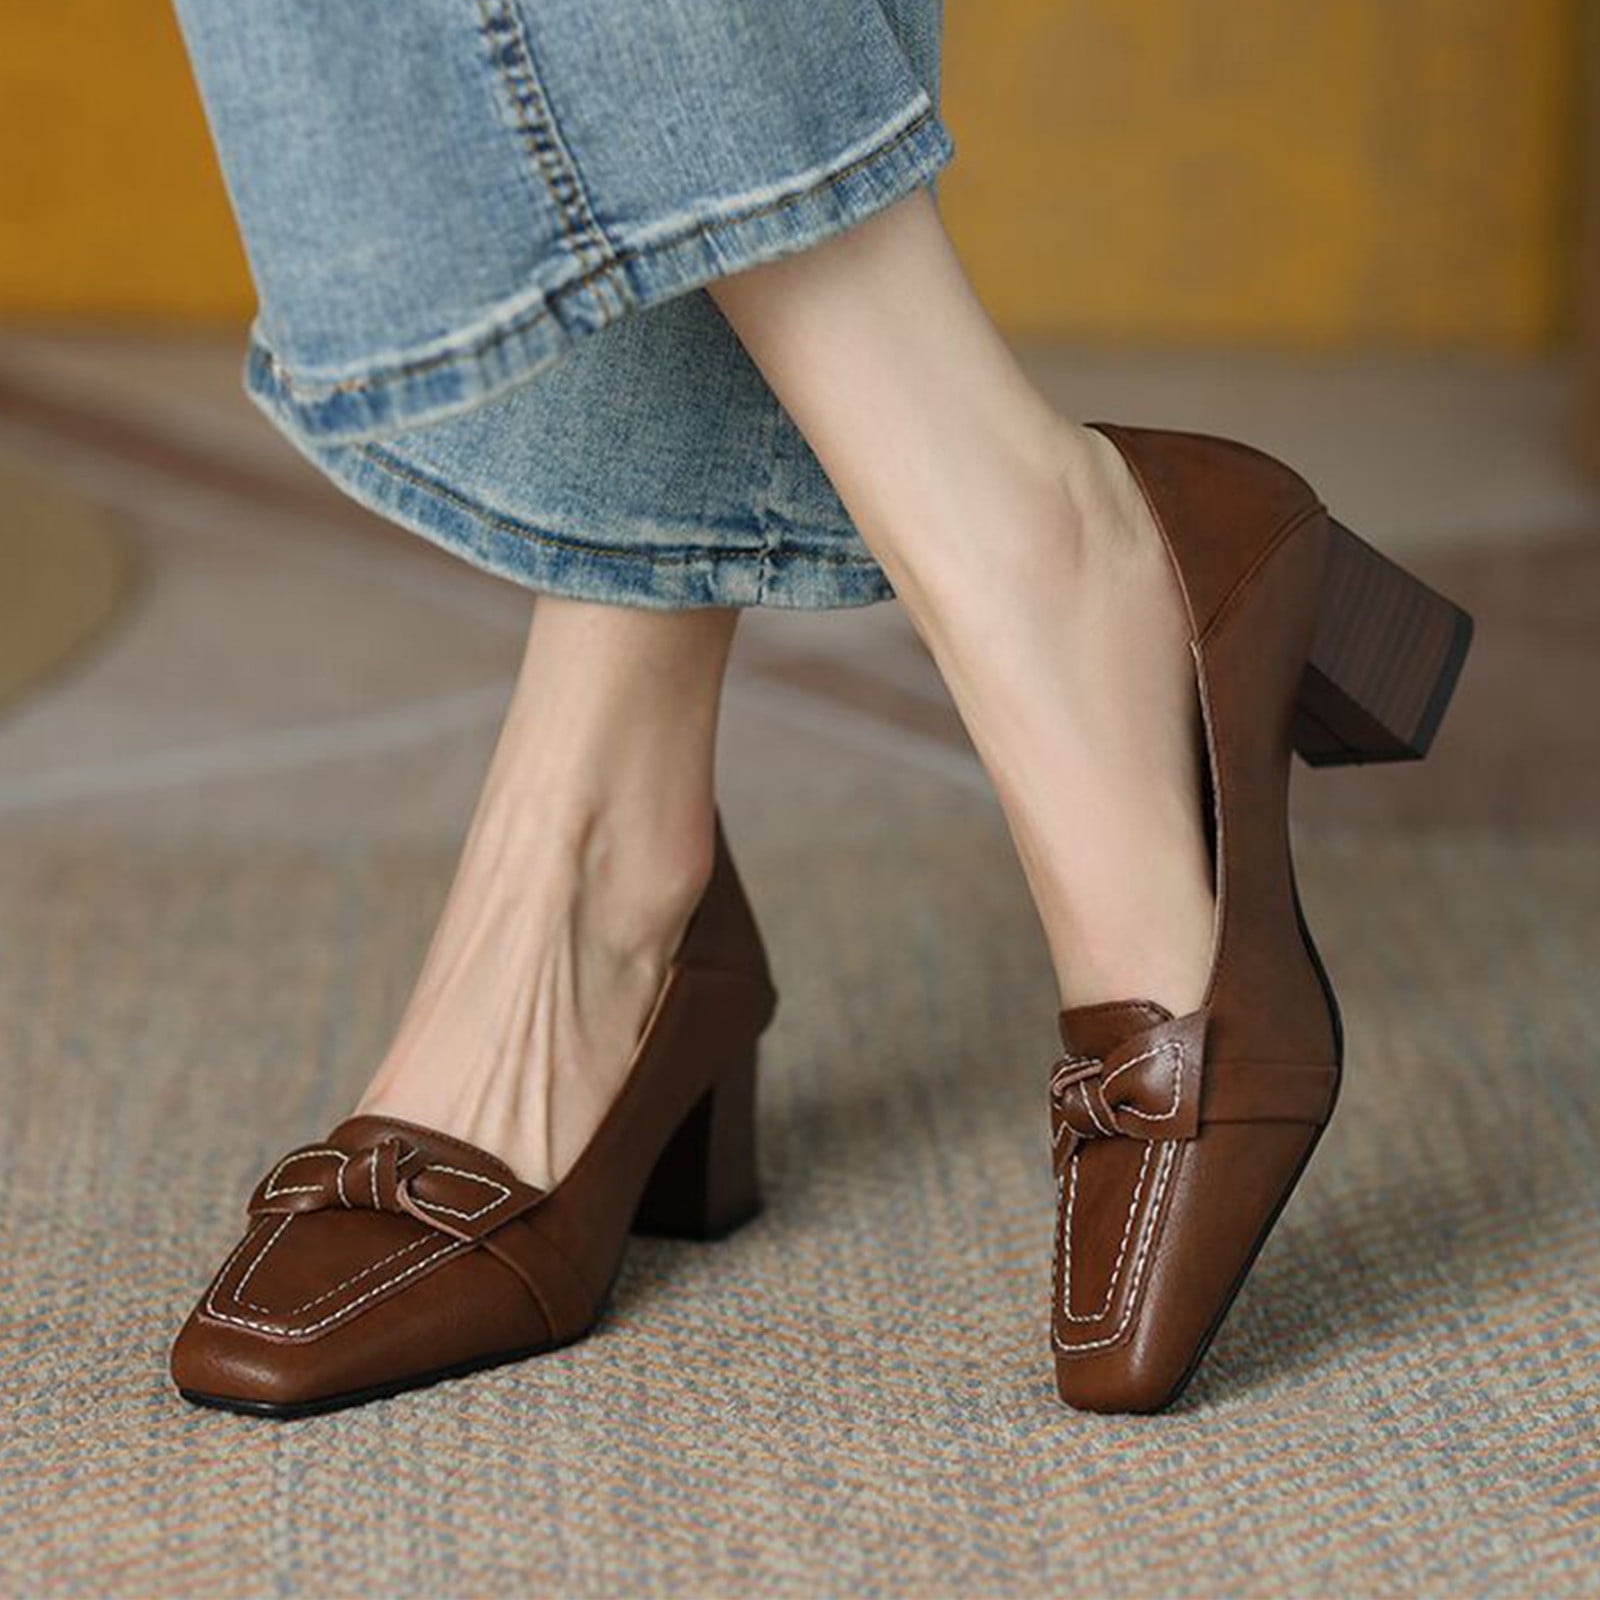 Cute brown thick heel | Heels, Thick heels, Heels shopping